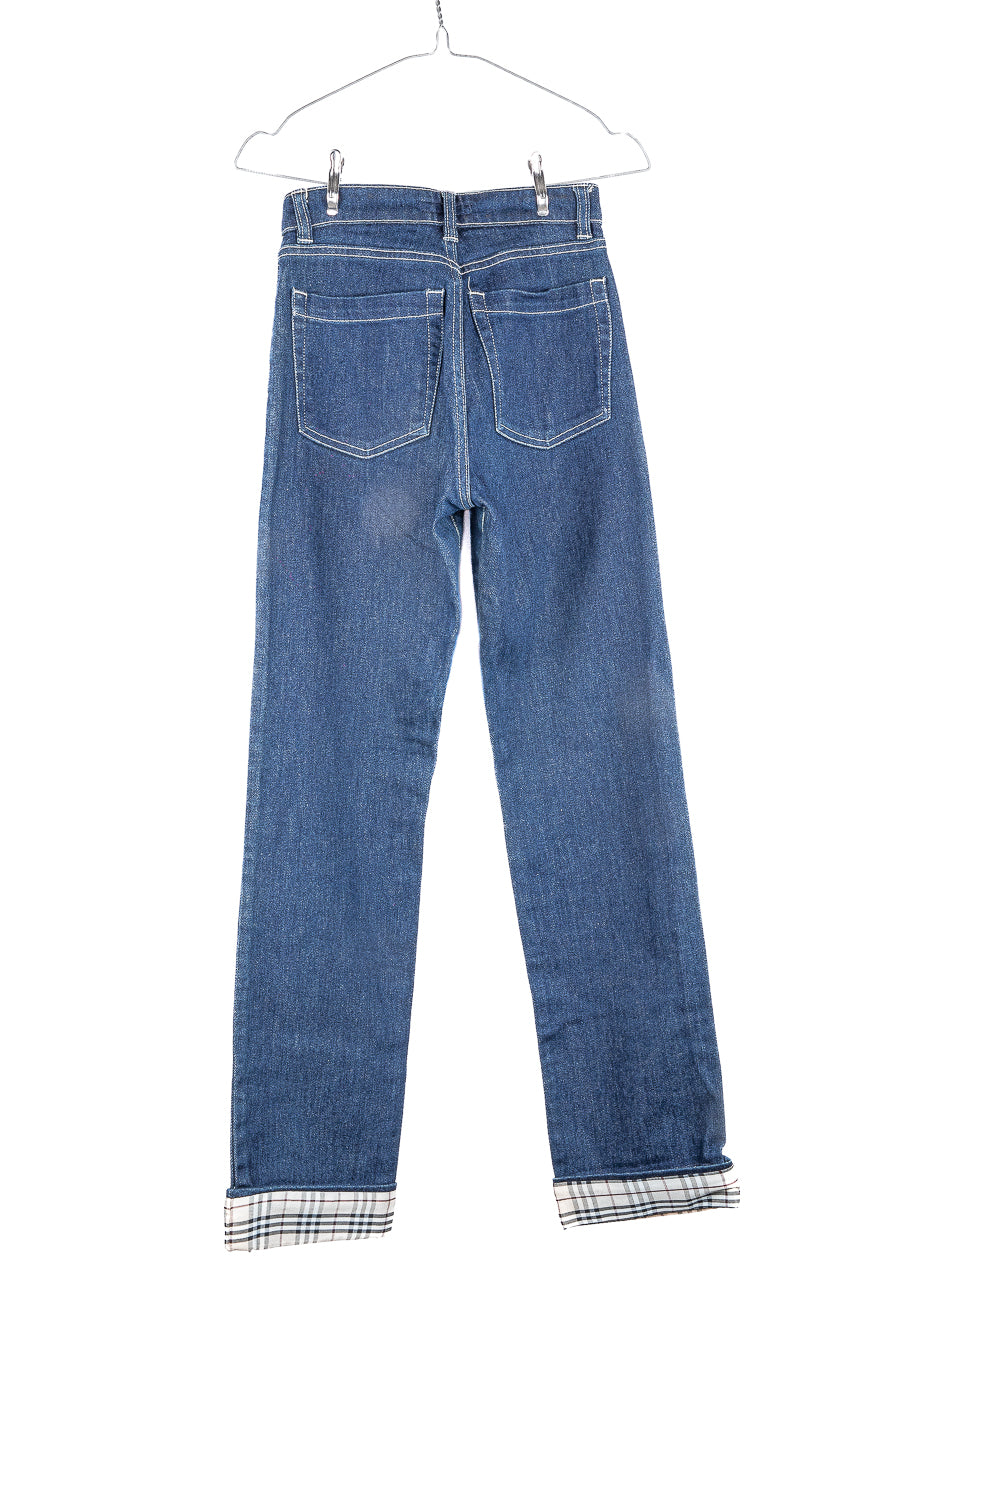 Nova Check Print Plaid Blue Denim Jeans